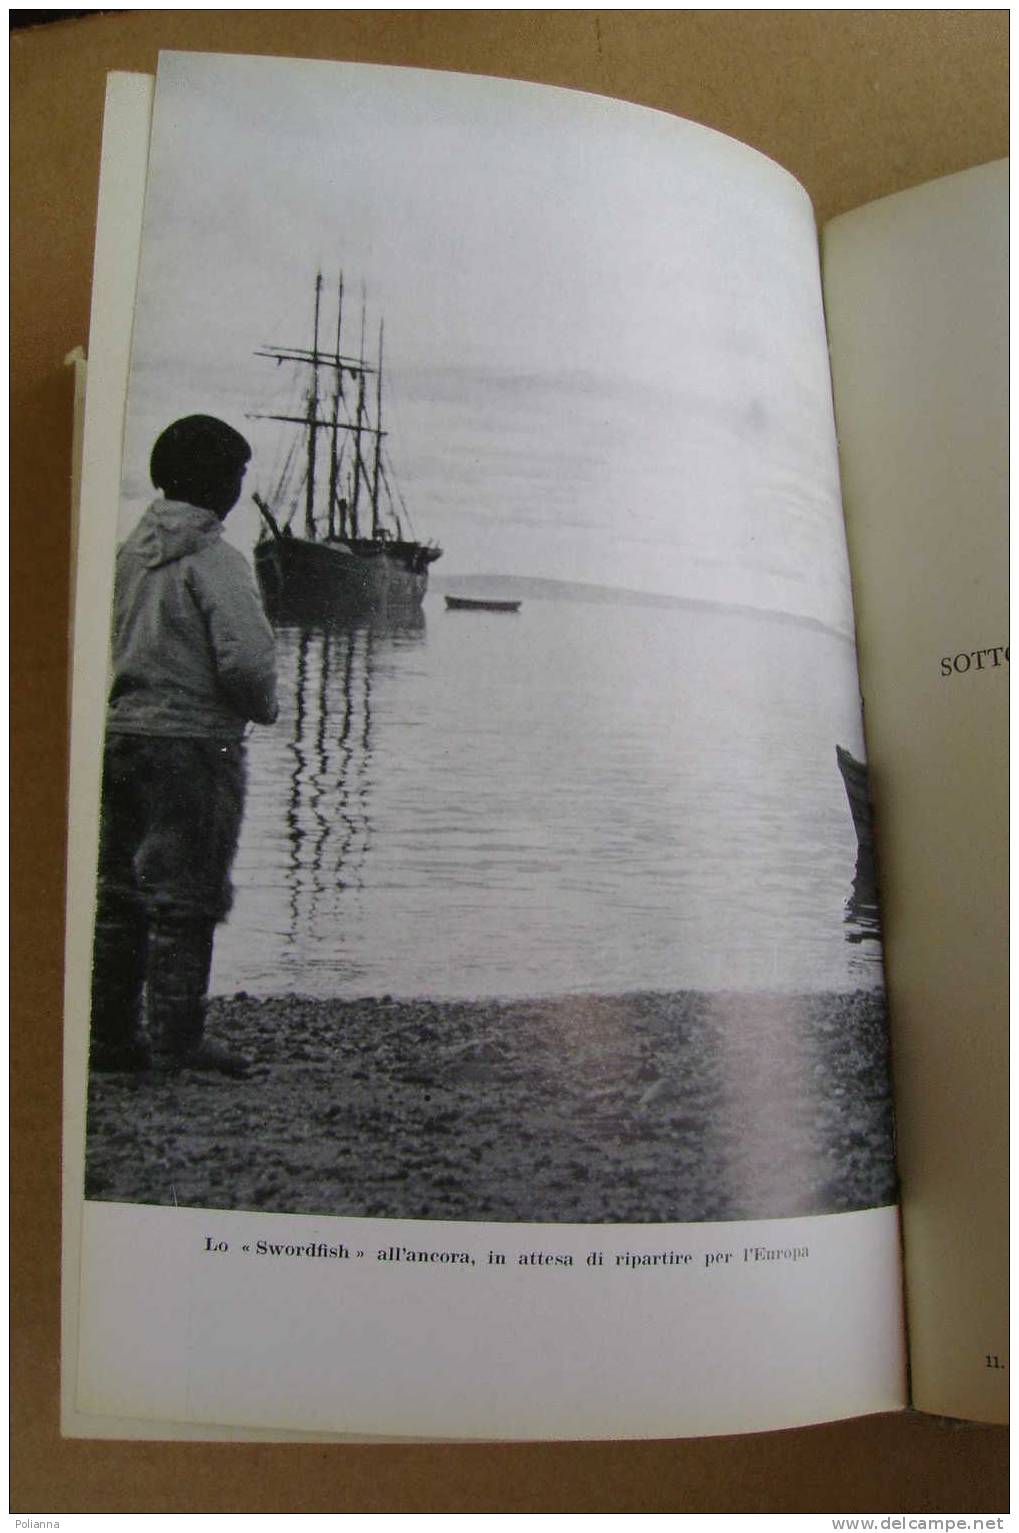 PDD/69 Aage Gilberg UN MEDICO TRA GLI ESCHIMESI Bompiani I^ Ed. 1951/nave "gustav Holm"/Thule/Capo Melville - Turismo, Viajes